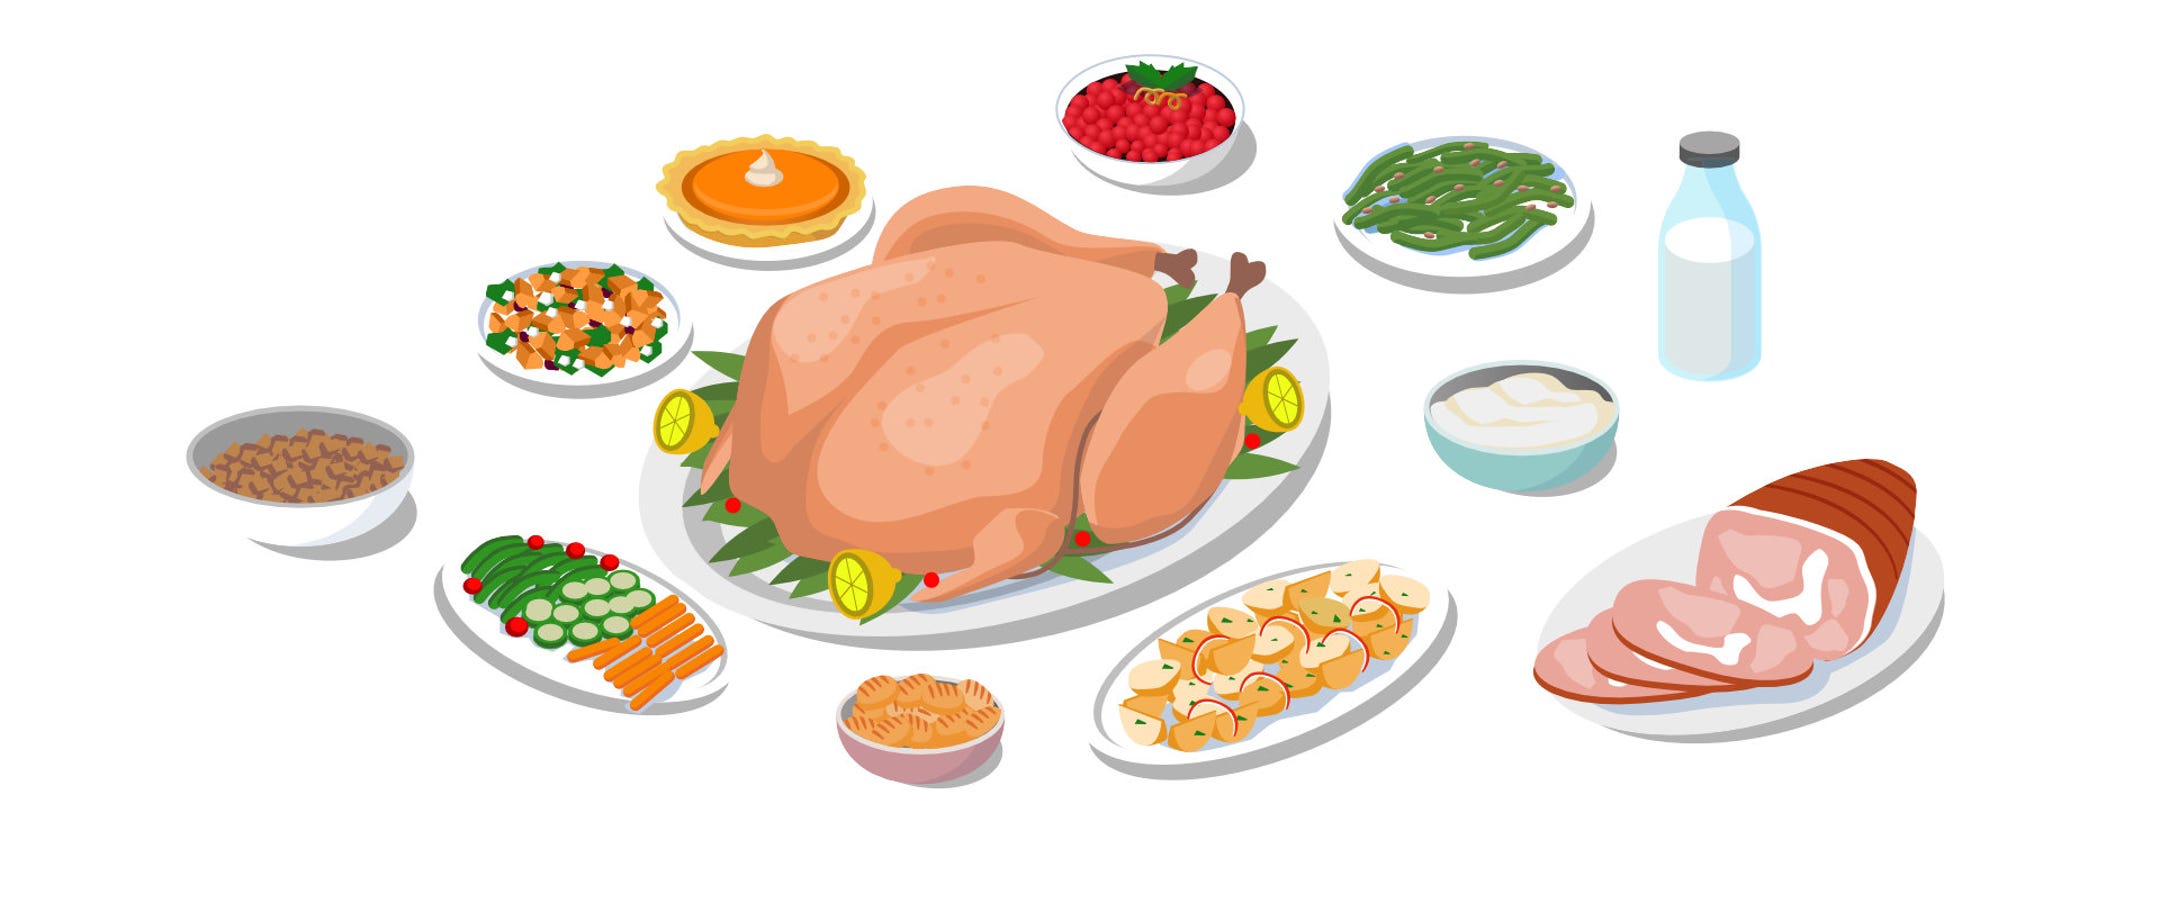 thanksgiving food cartoon